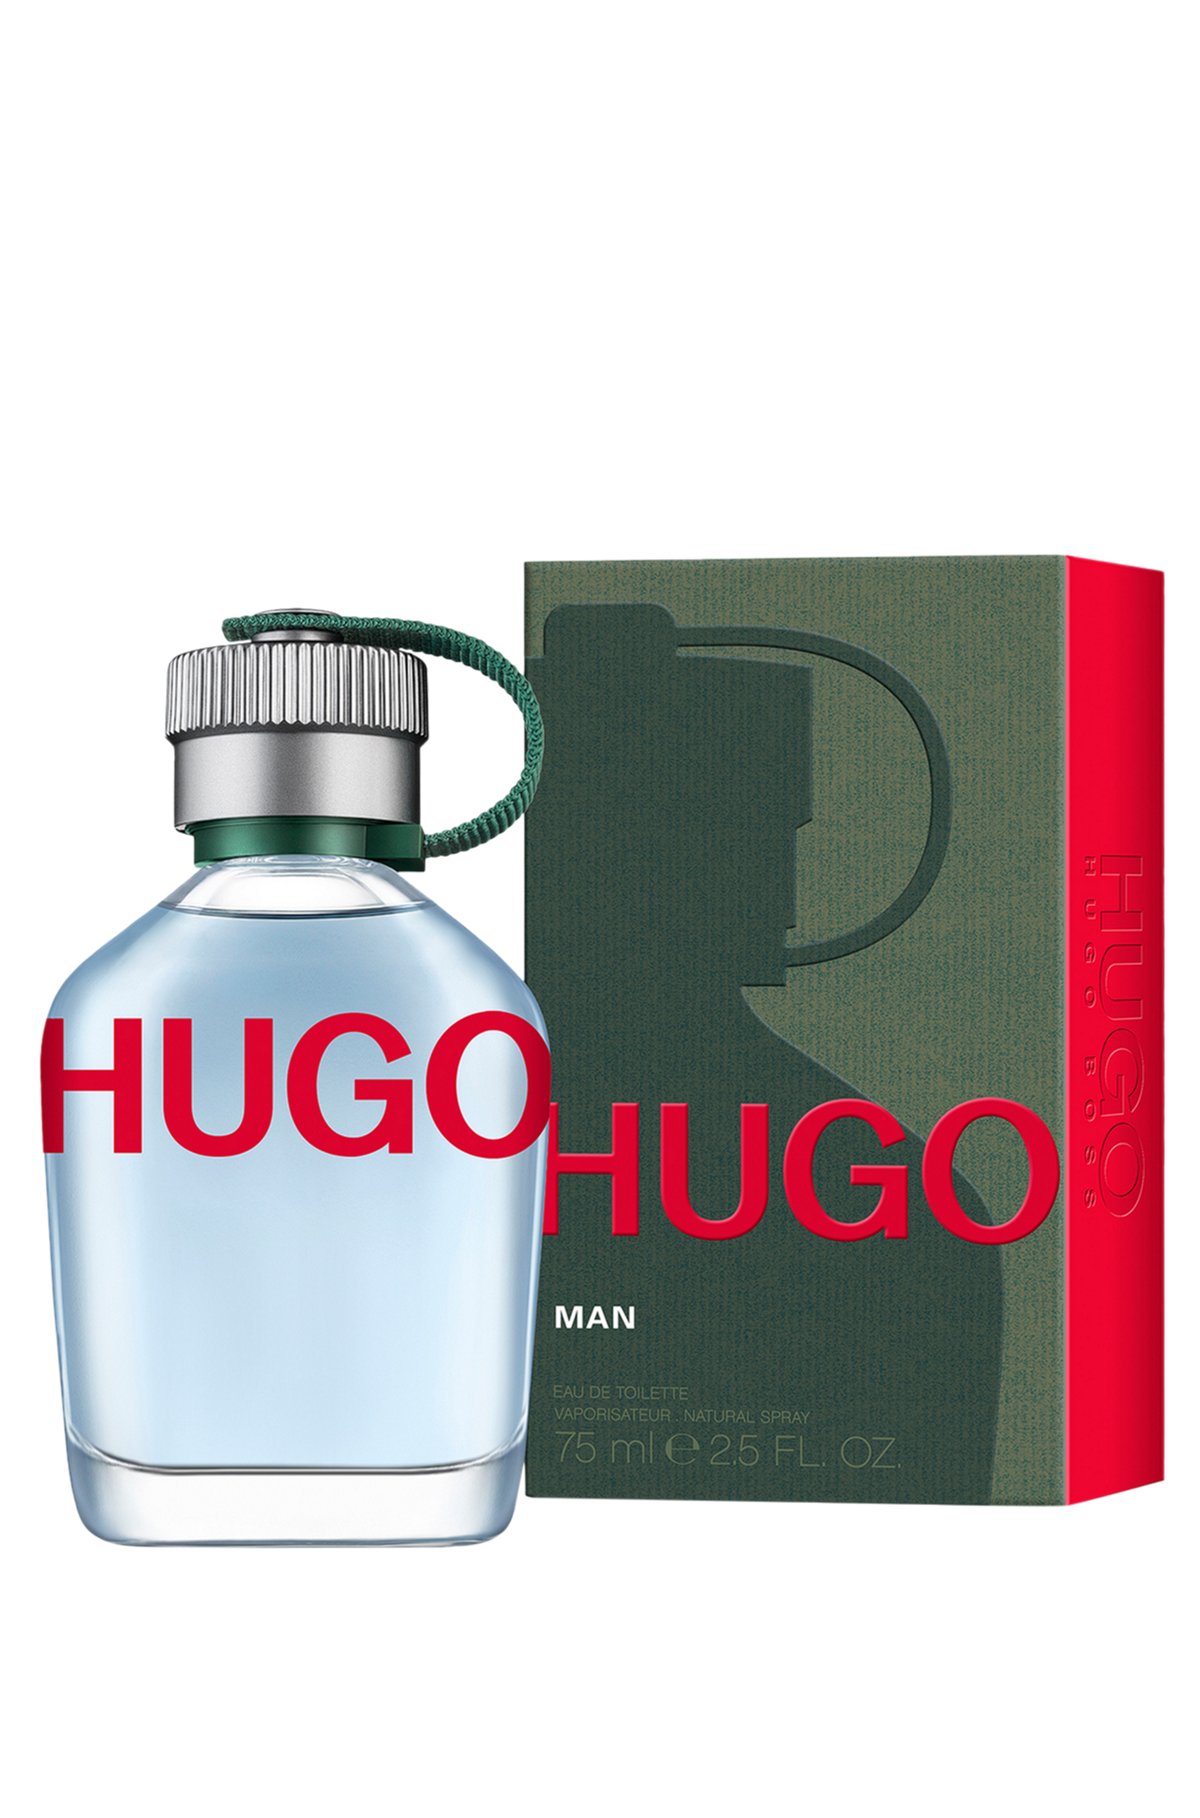 Vochtigheid zaterdag Samenwerking HUGO - HUGO Man eau de toilette 75ml